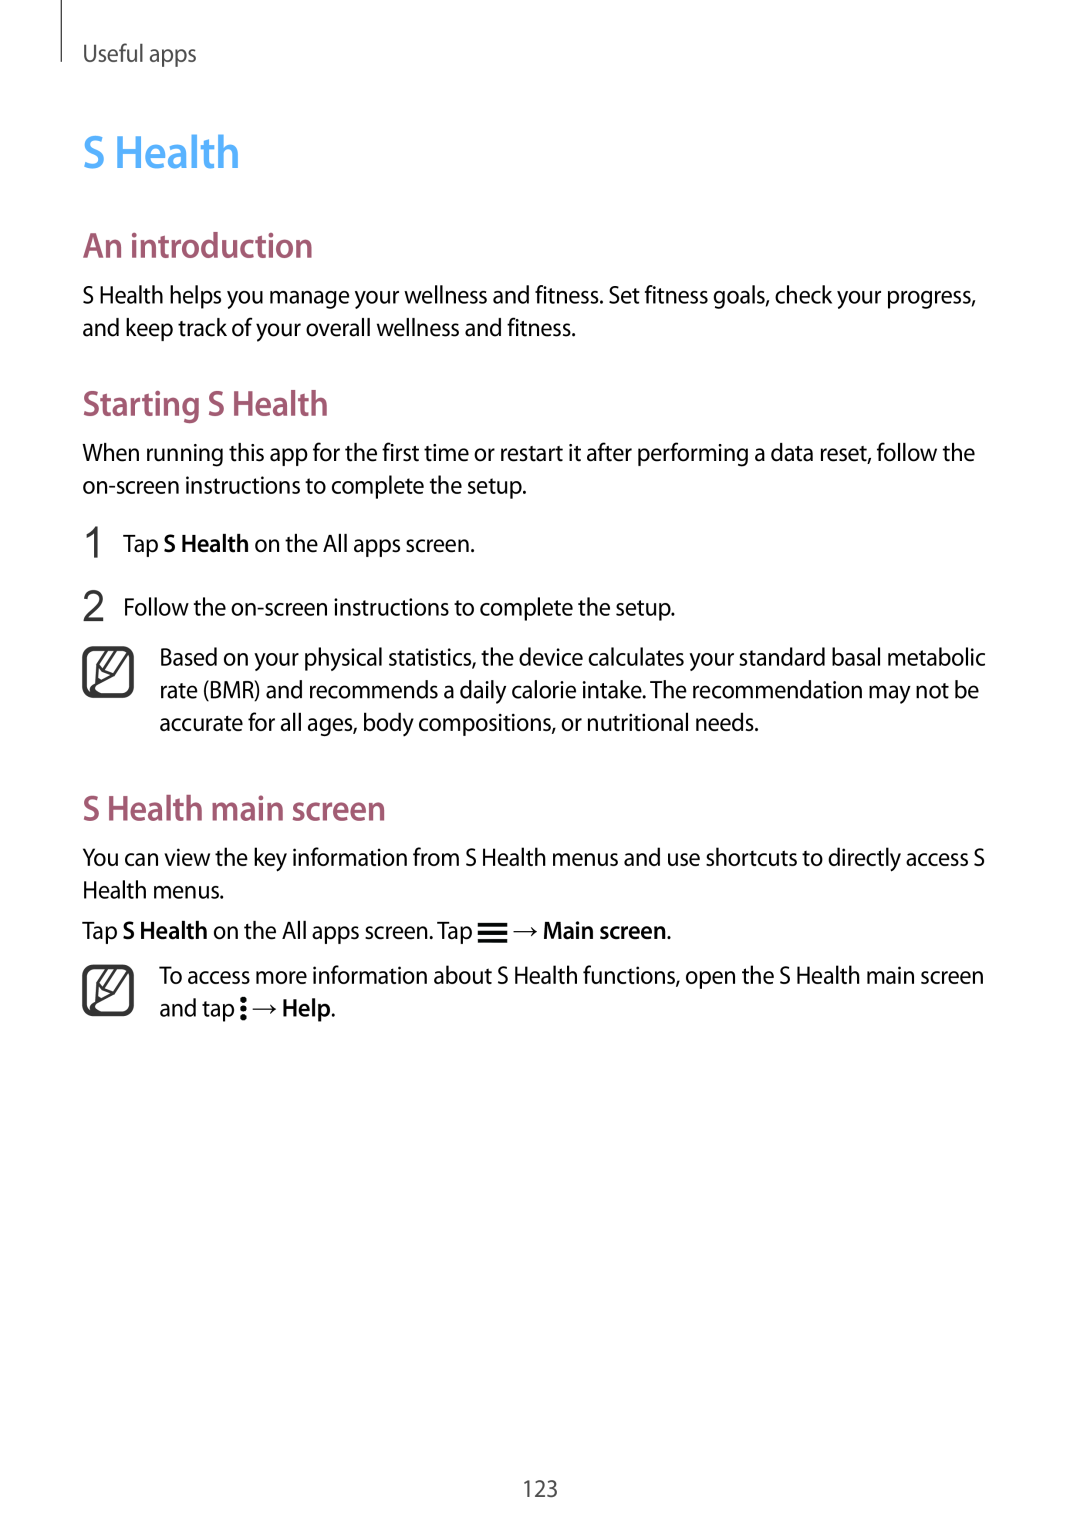 Samsung SM-N915FZKESER, SM-N915FZWYEUR manual Starting S Health, S Health main screen, An introduction, Useful apps 